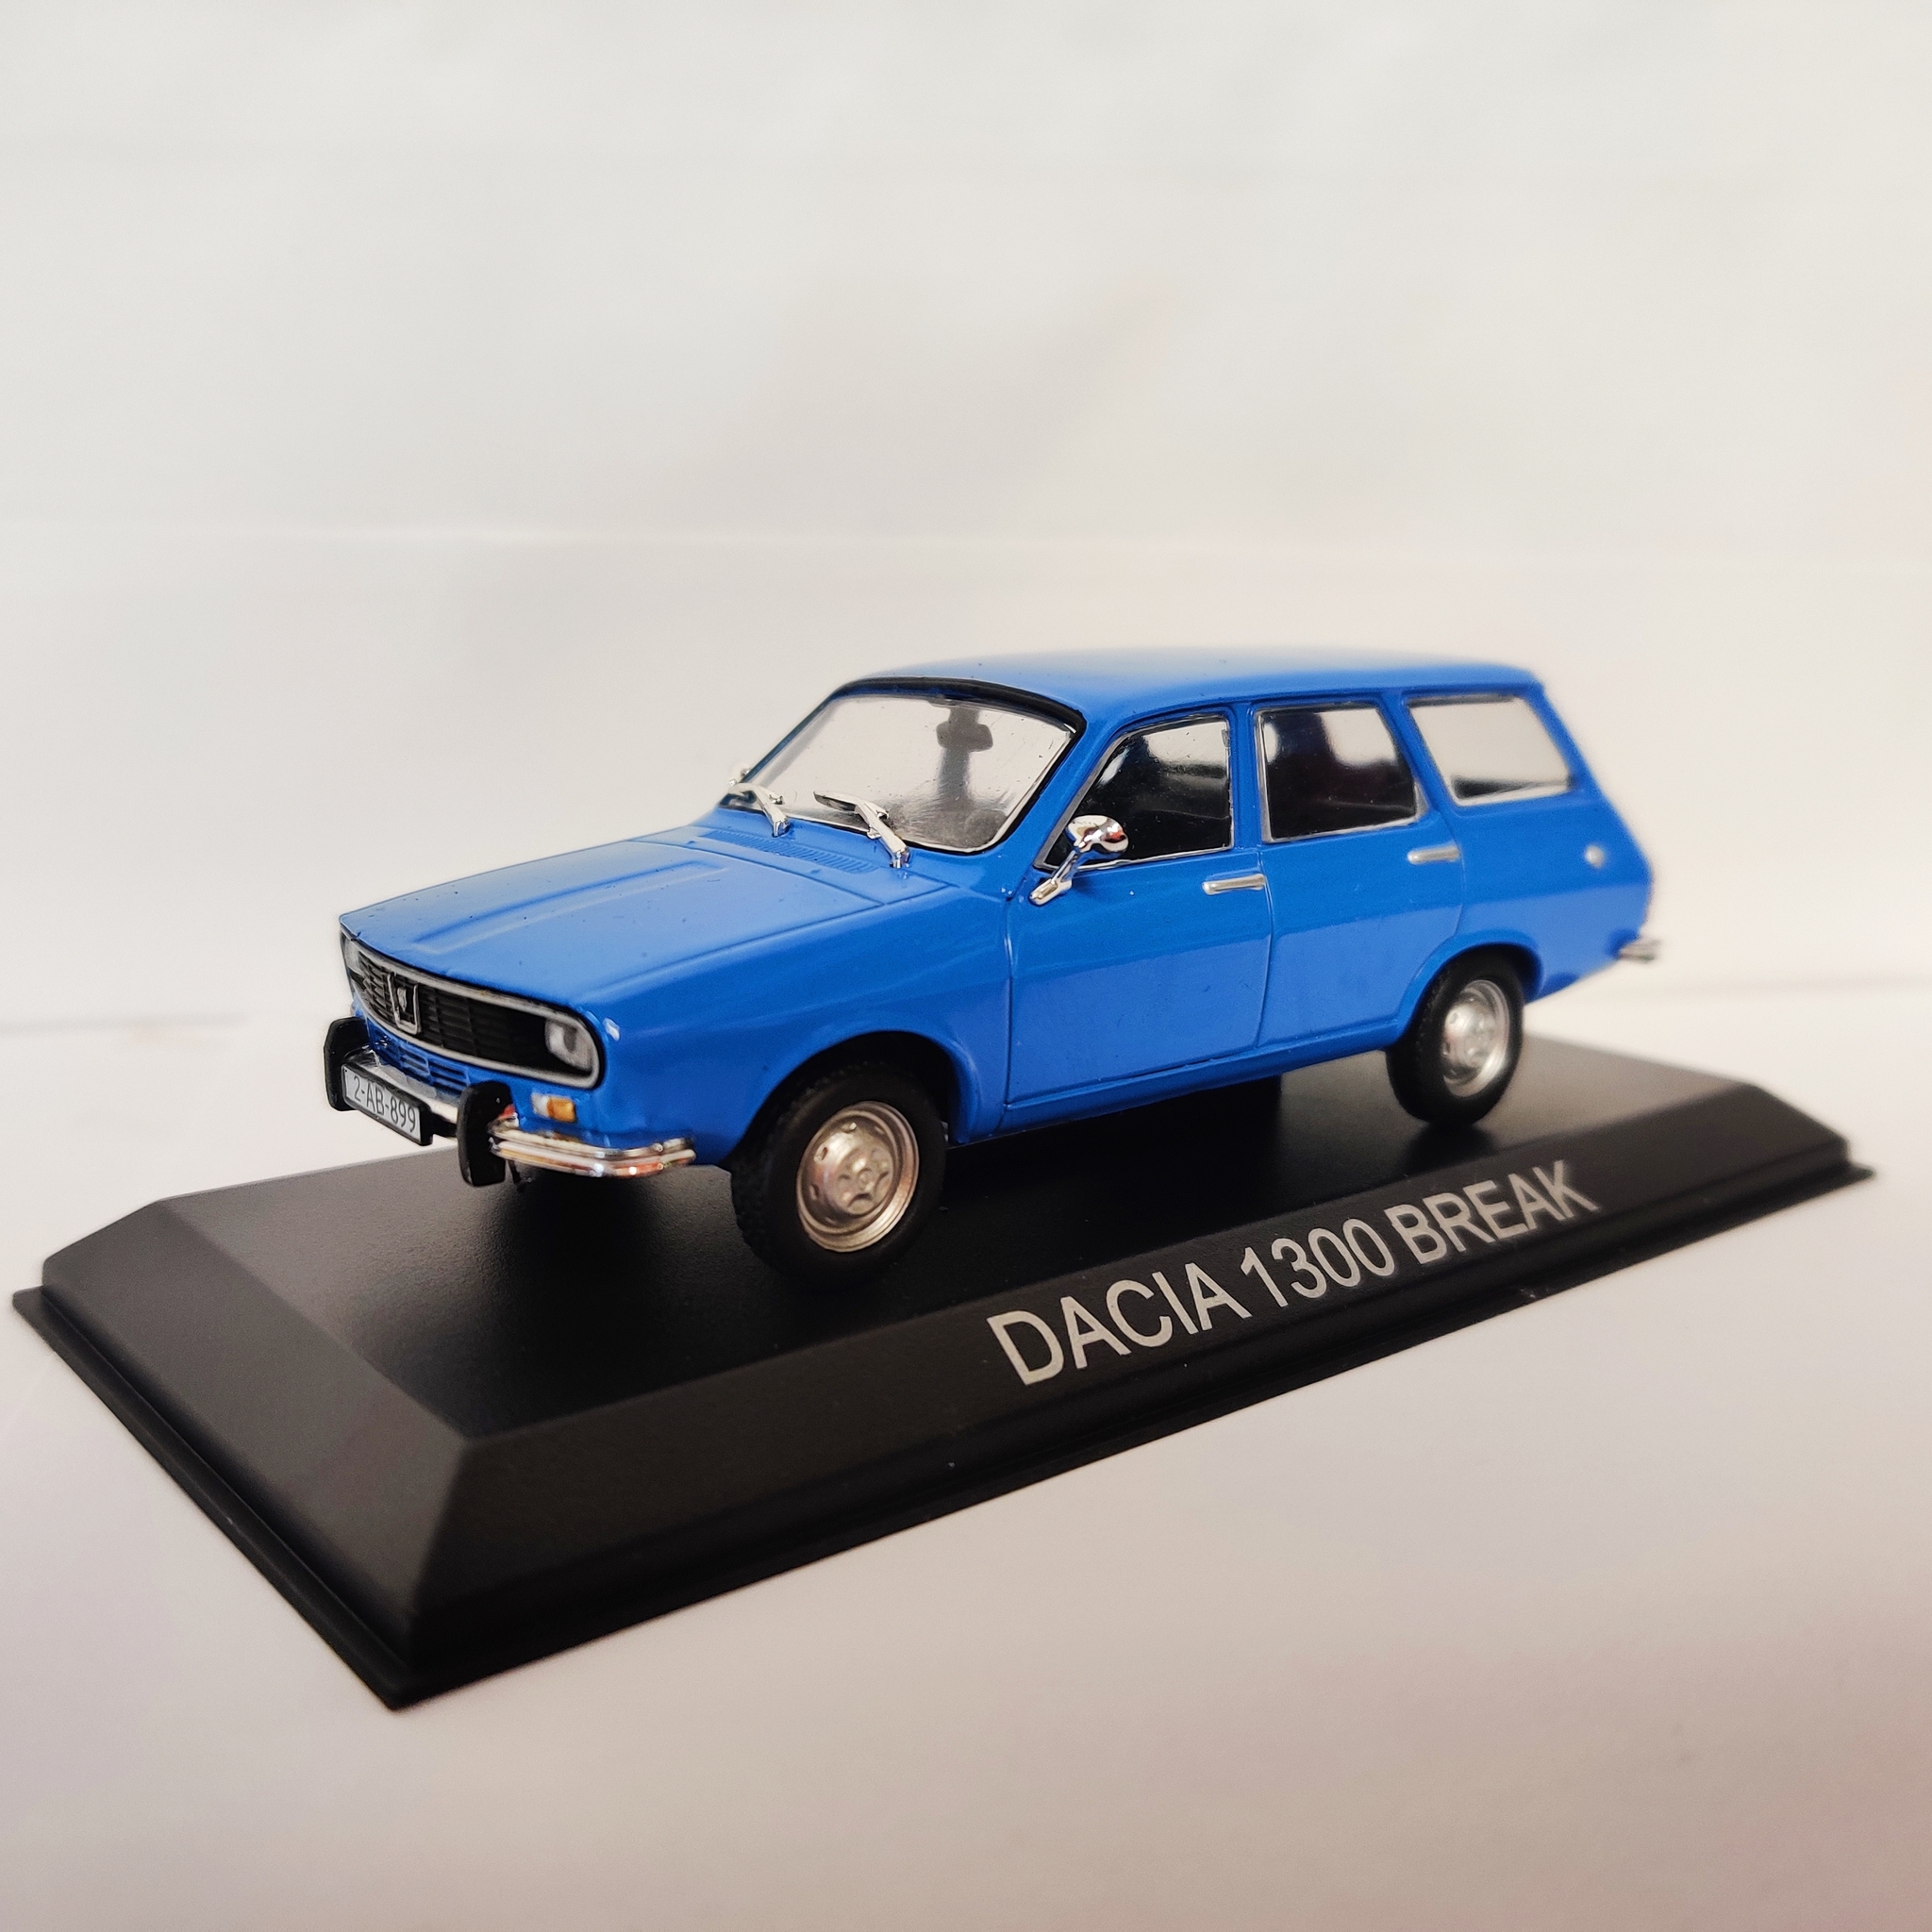 Skala 1/43 Dacia 1300 Break fr Magazine Models